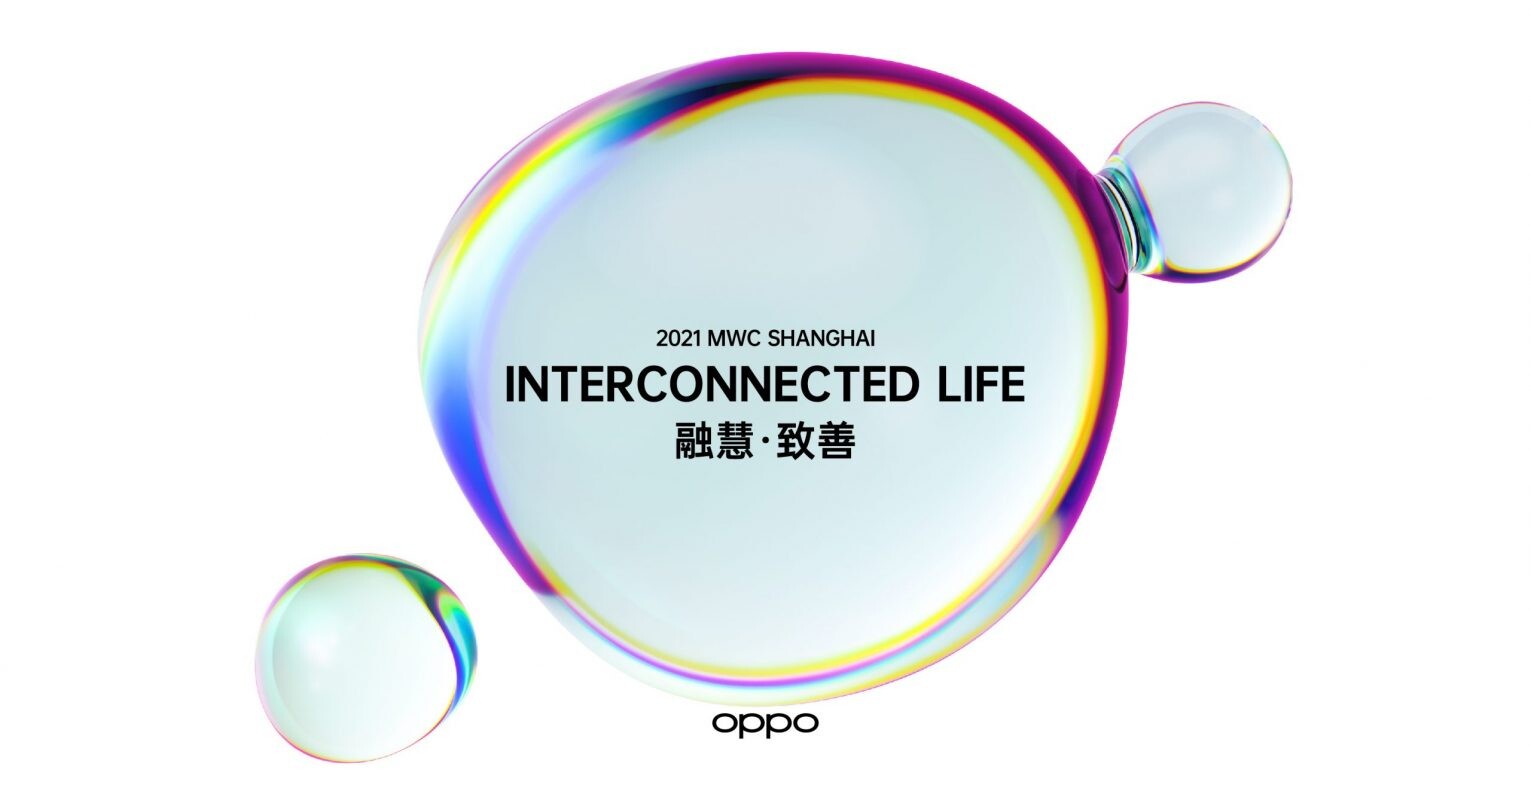 OPPO เตรียมจัดแสดงเทคโนโลยีใหม่สุดล้ำ พร้อมความร่วมมือกับพันธมิตร ในงาน Mobile World Congress Shanghai 2021